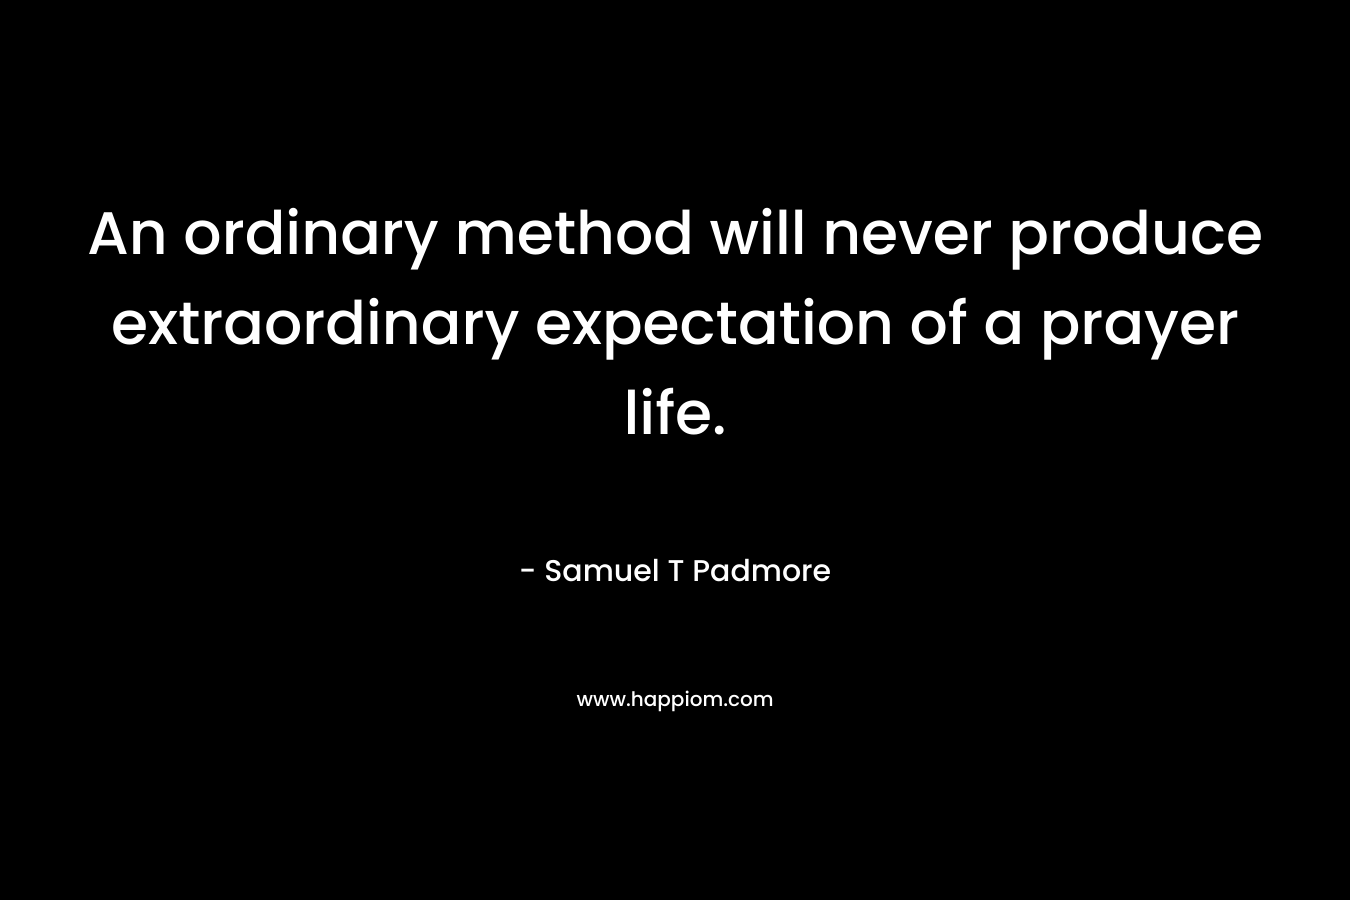 An ordinary method will never produce extraordinary expectation of a prayer life.